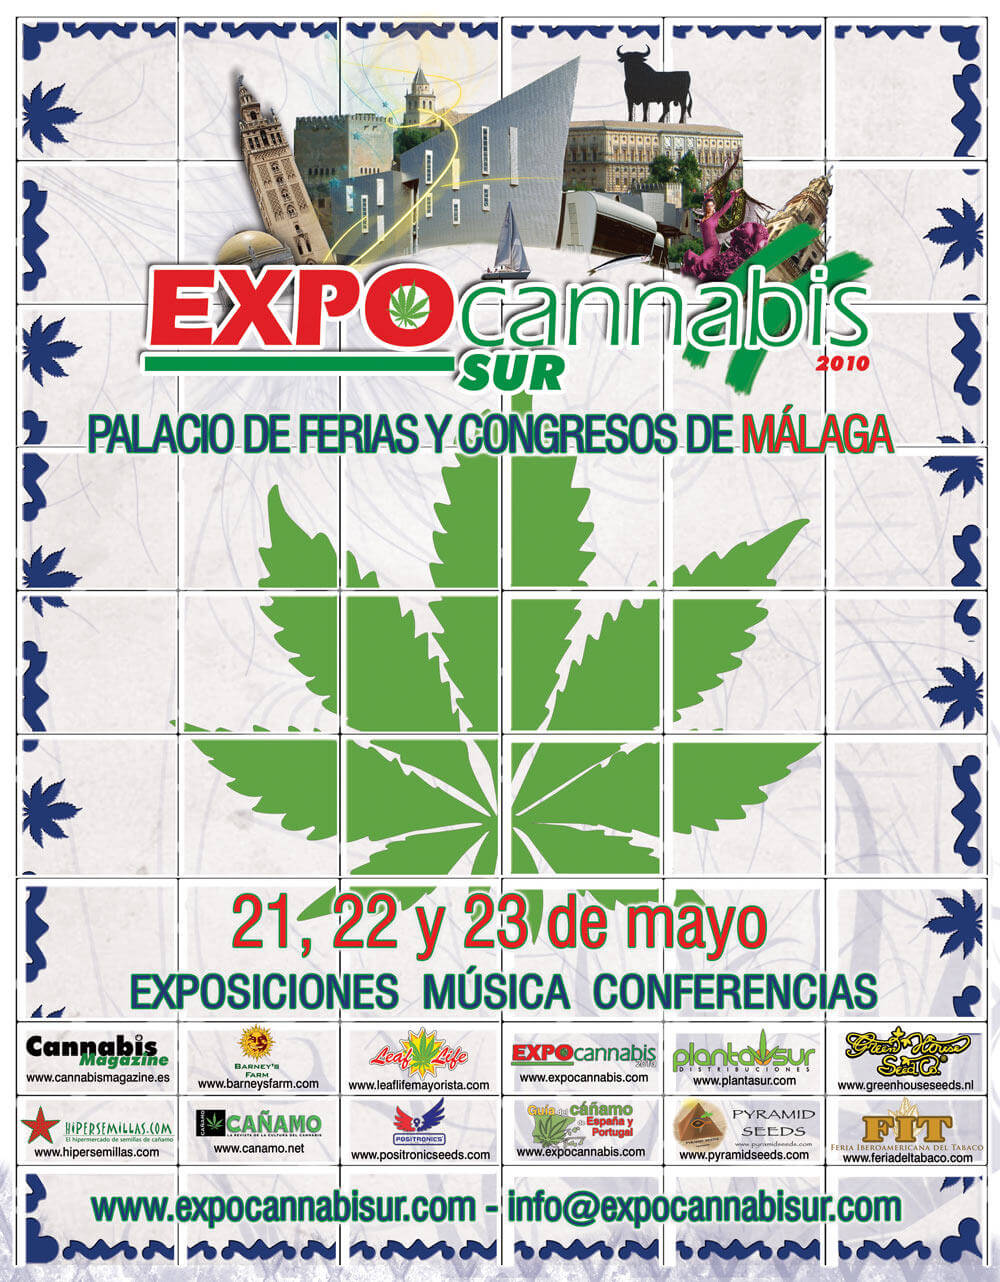 Expocannabis Sur 2010